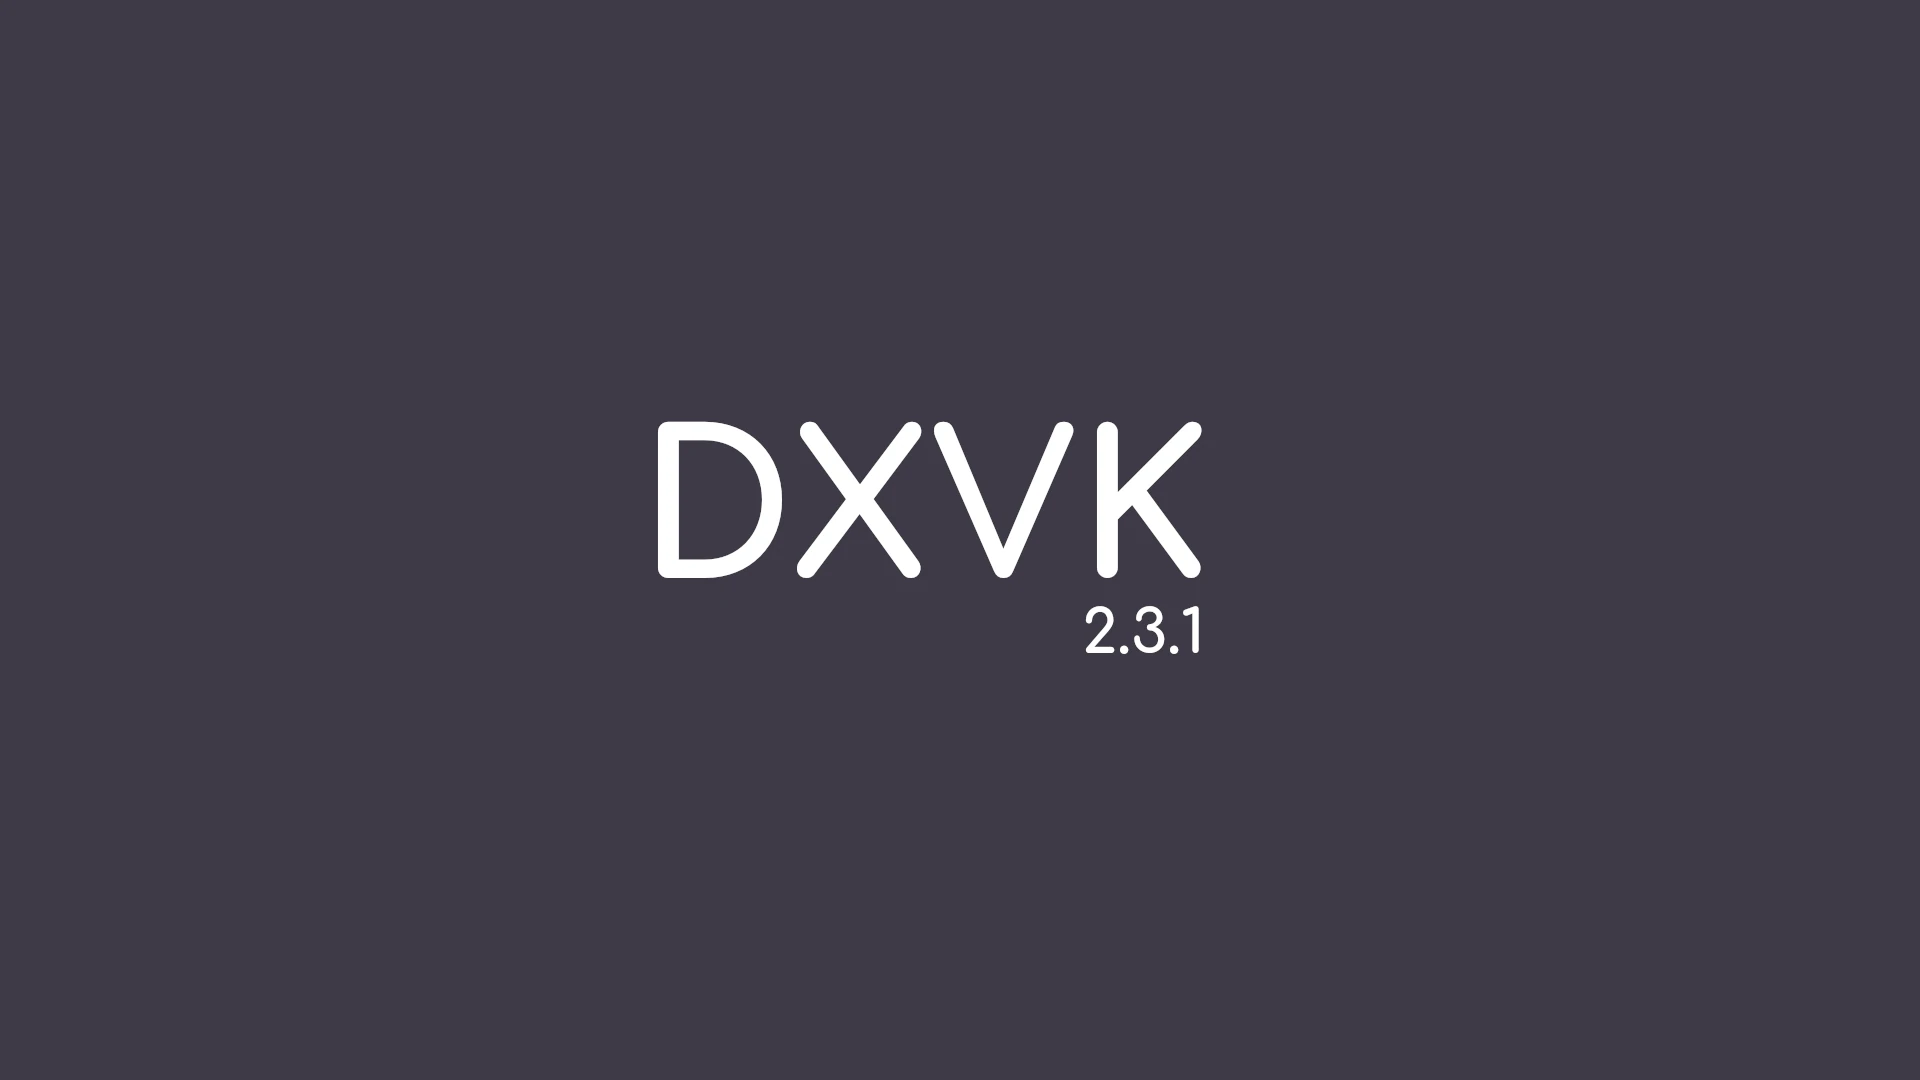 DXVK 2.3.1 Brings More Efficient Shader Code Generation on NVIDIA GPUs